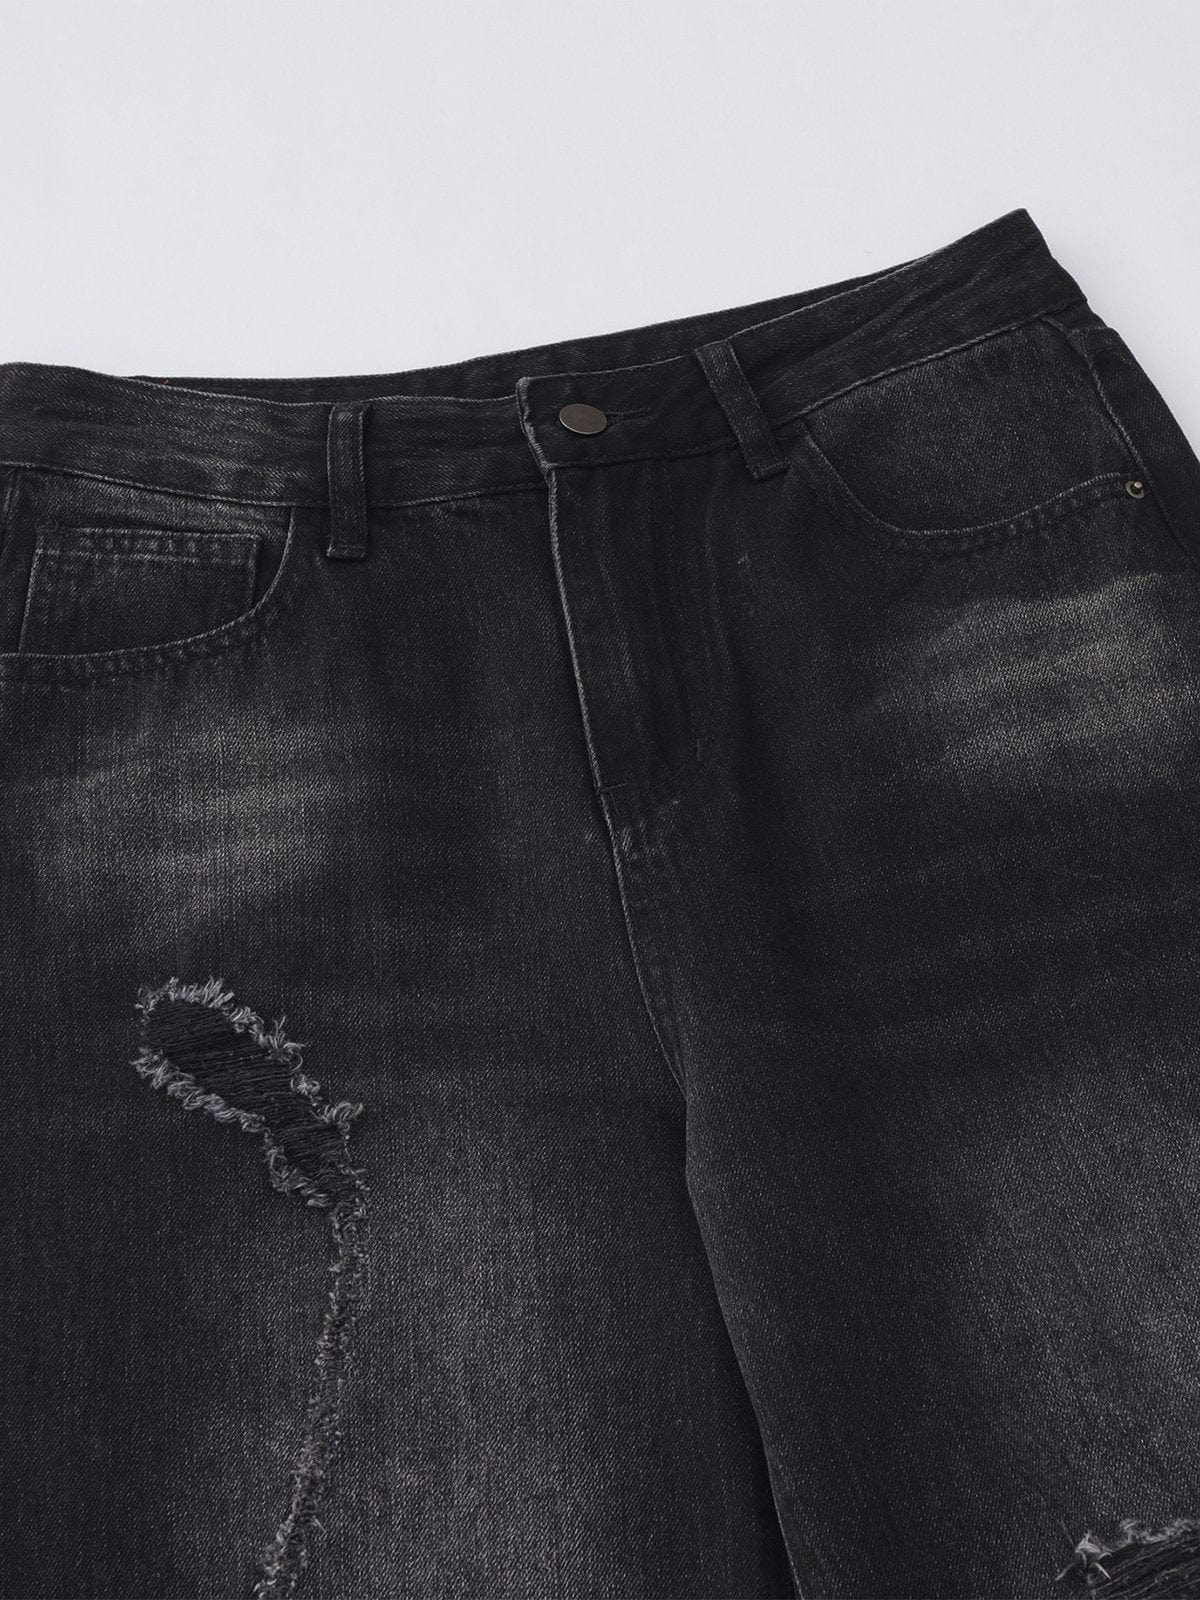 NEV Irregular Ripped Raw Edge Jeans